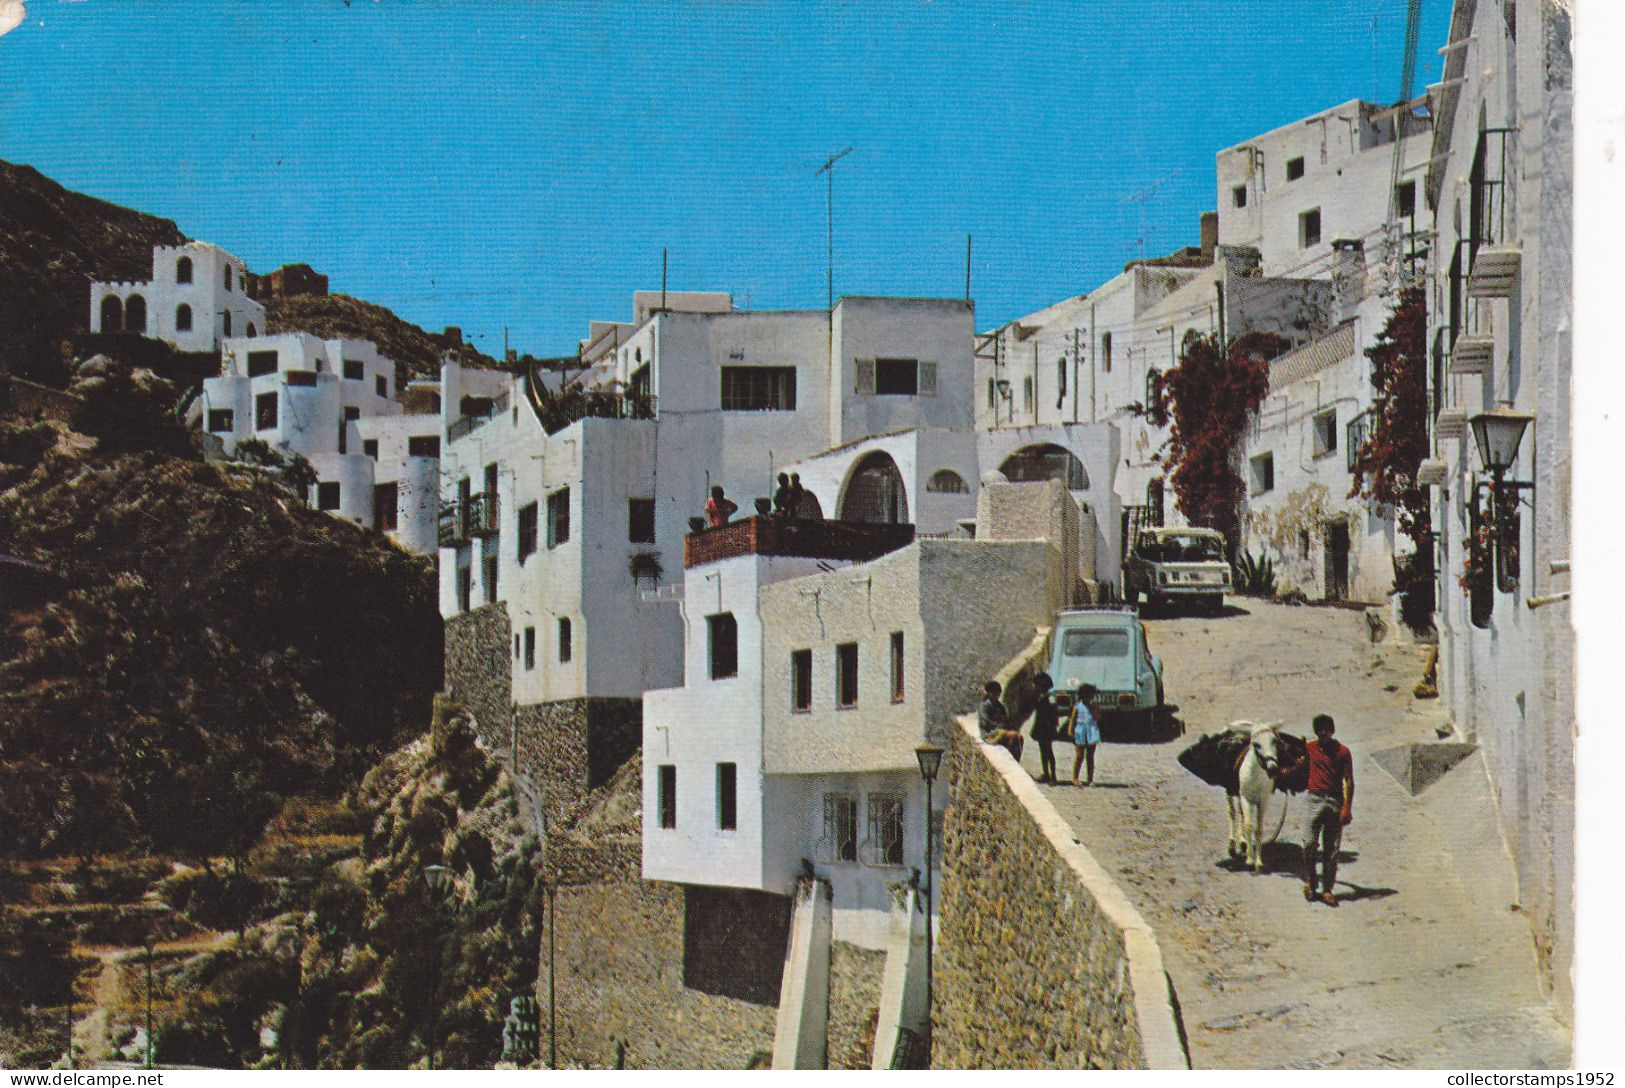 CPA  - MOJACAR, ALMERIA,  WHITE BUILDINGS, TREES, TYPICAL STREET, PEOPLE, OLD CARS - SPAIN - Almería